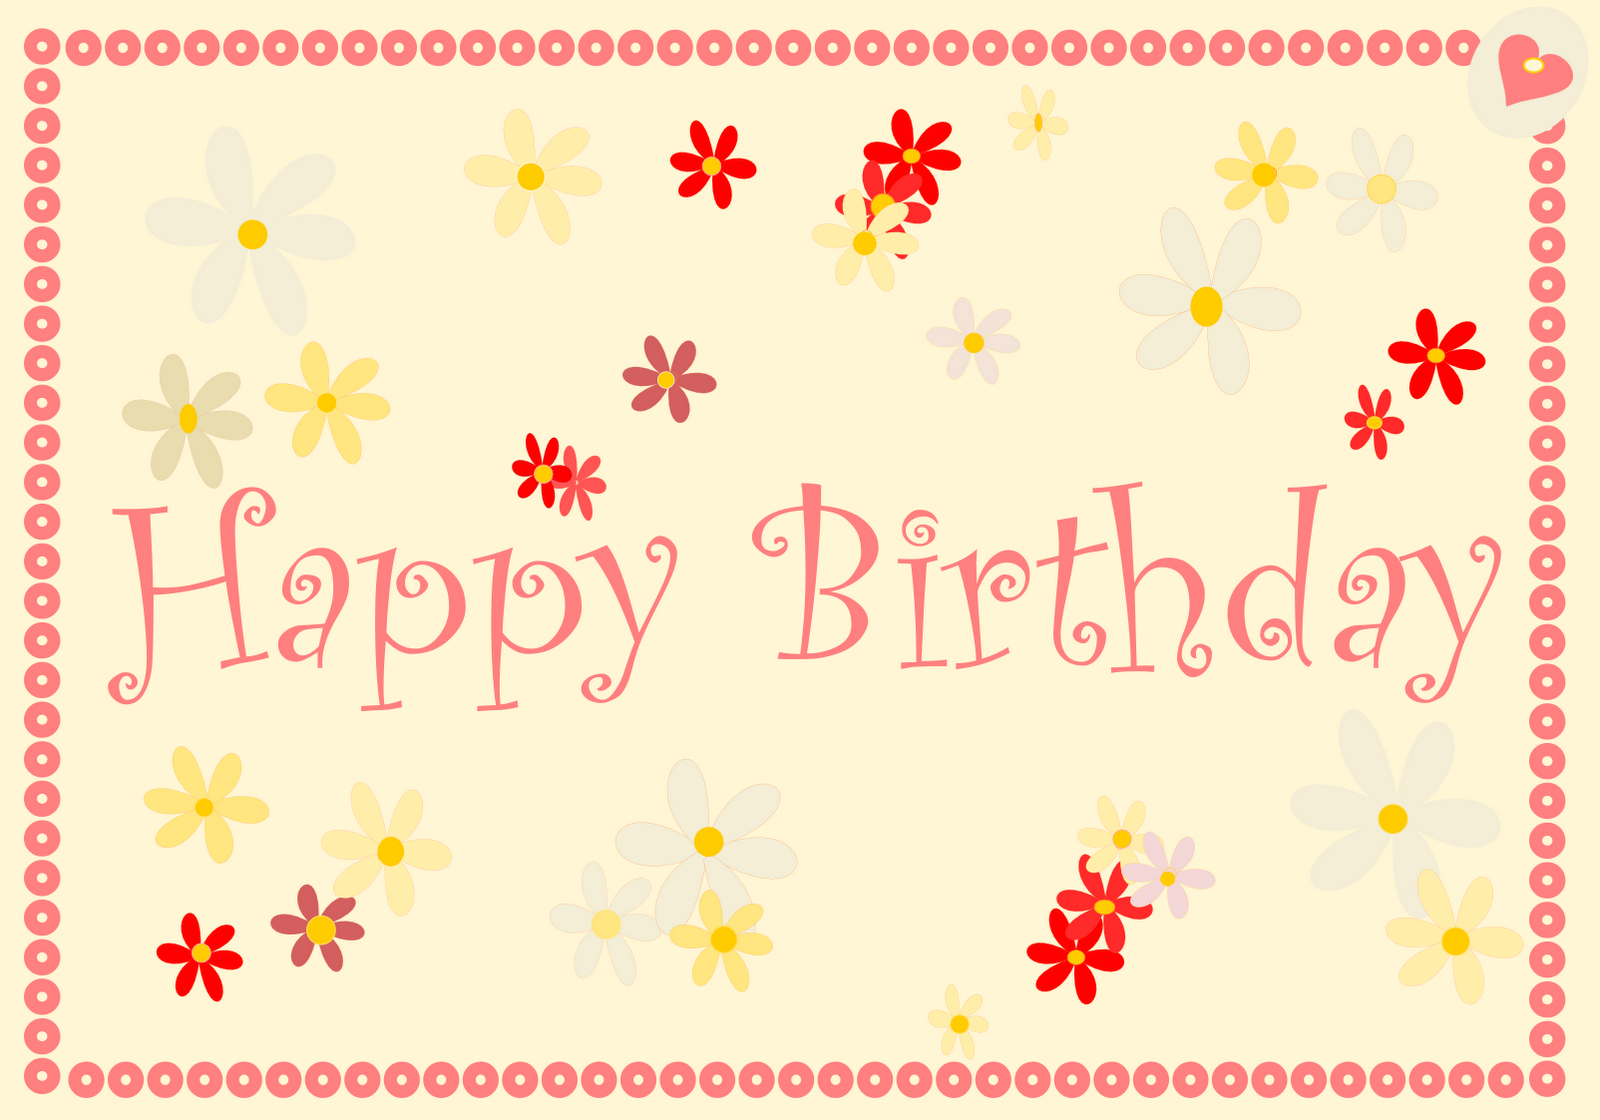 Happy Birthday Cards Online Free Printable - Free Printable Happy Birthday Cards Online